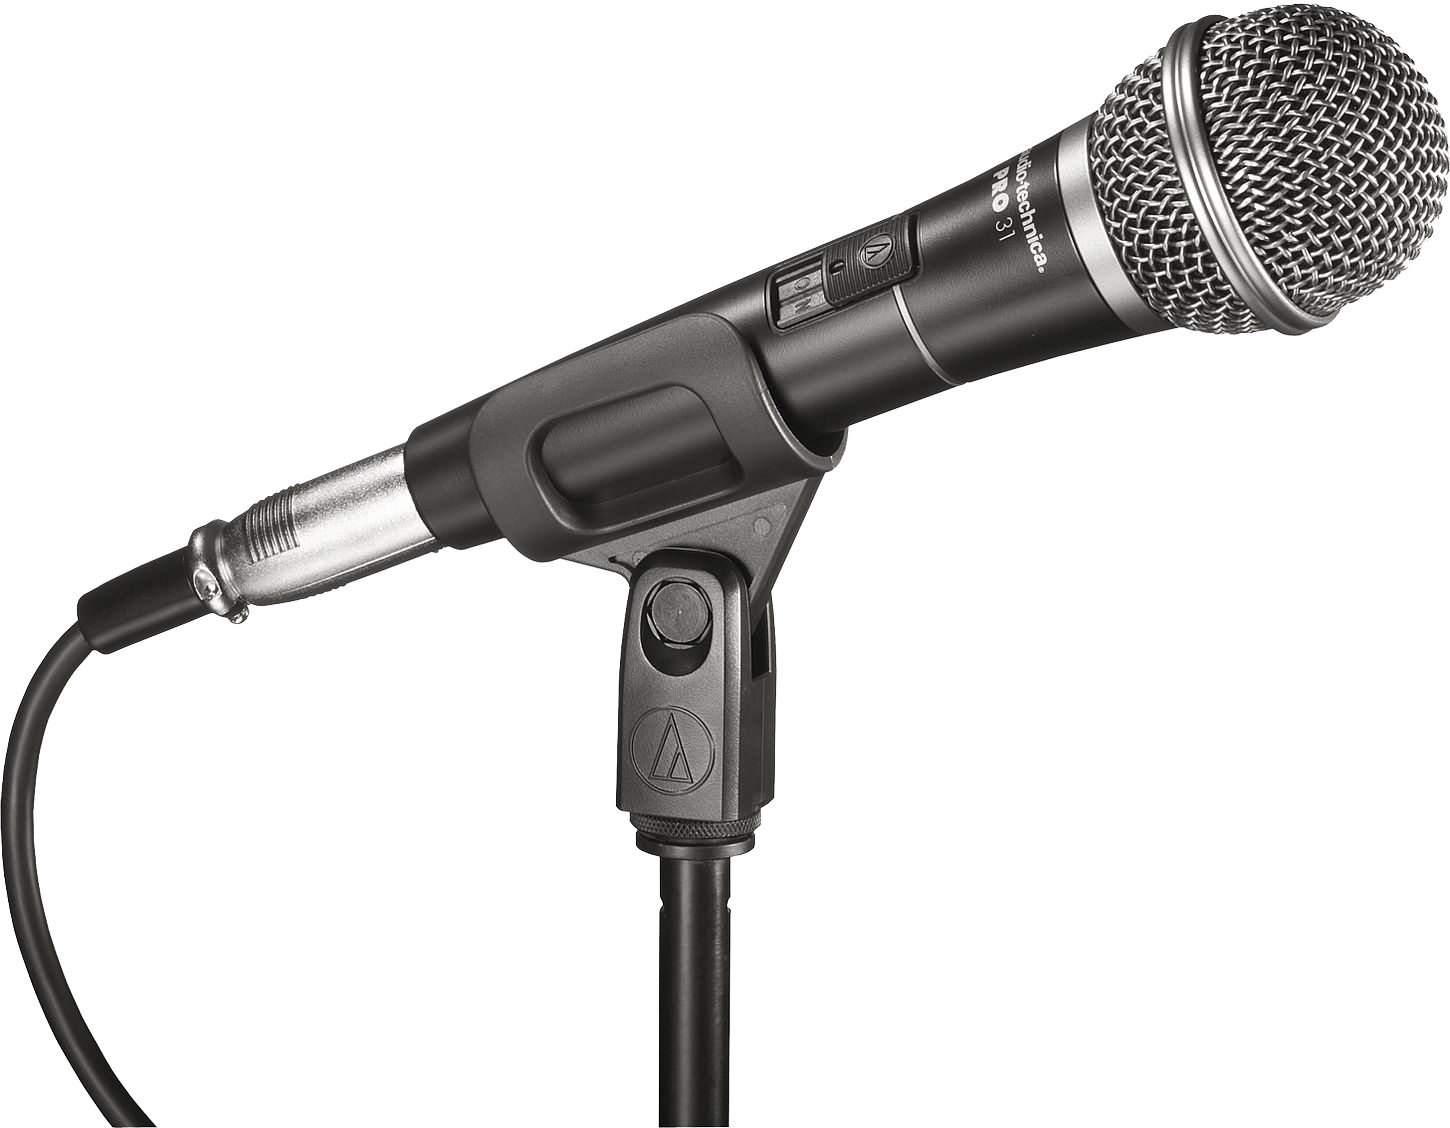 128x128 px, Microphone v2 Ico